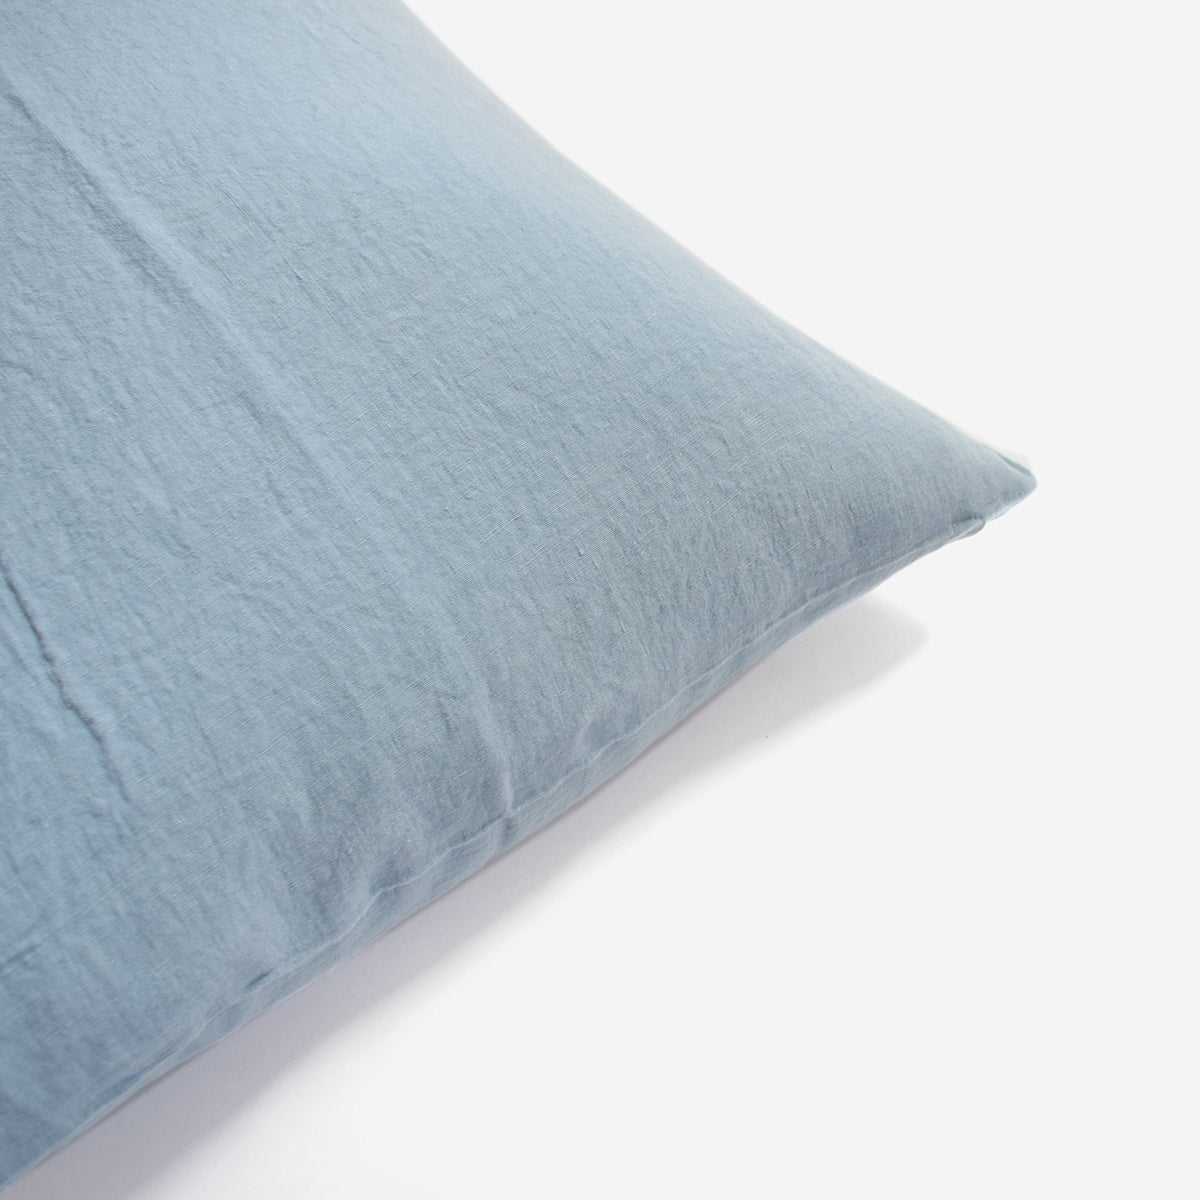 Linge Particulier Scandinavian Blue Euro Linen Pillowcase Sham for a colorful linen bedding look in grey blue - Collyer&#39;s Mansion